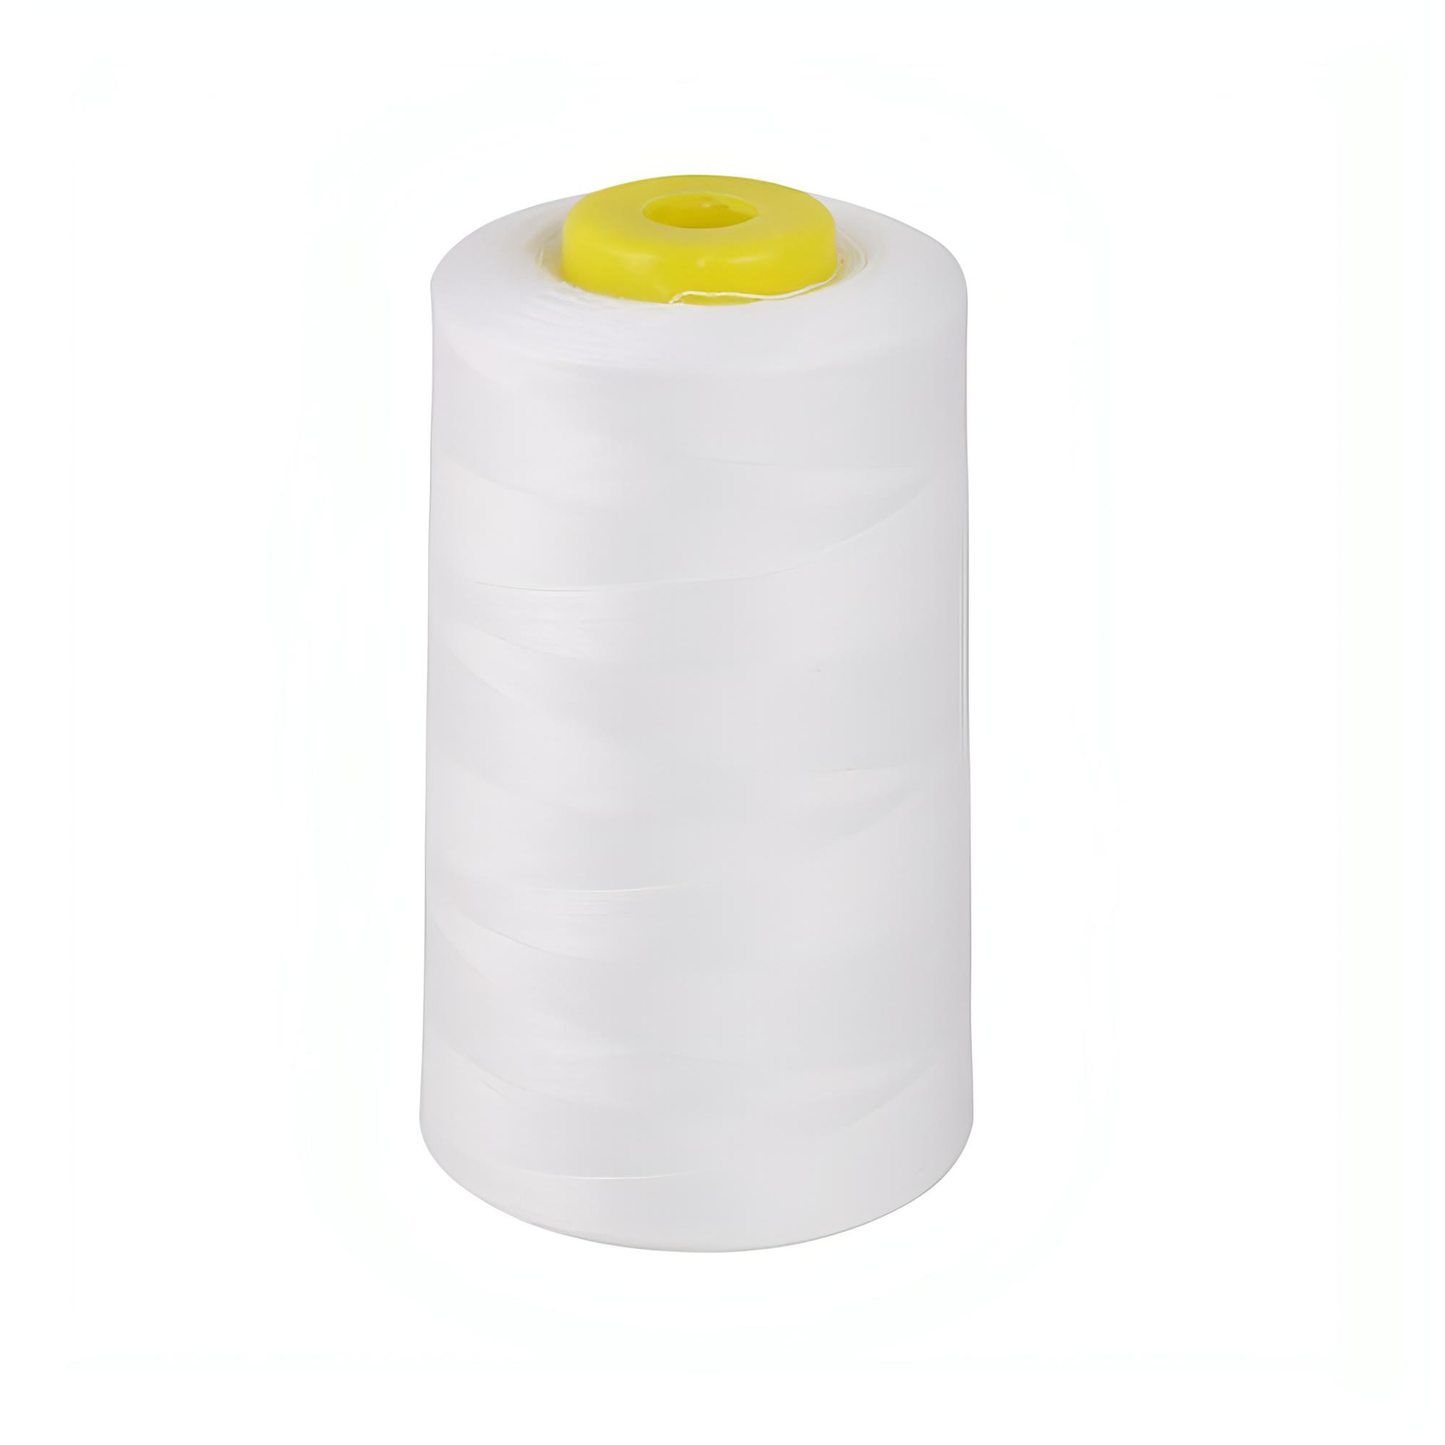 Overlocker Thread Cone 5000m Extra Large - White - Designed for Overlockers